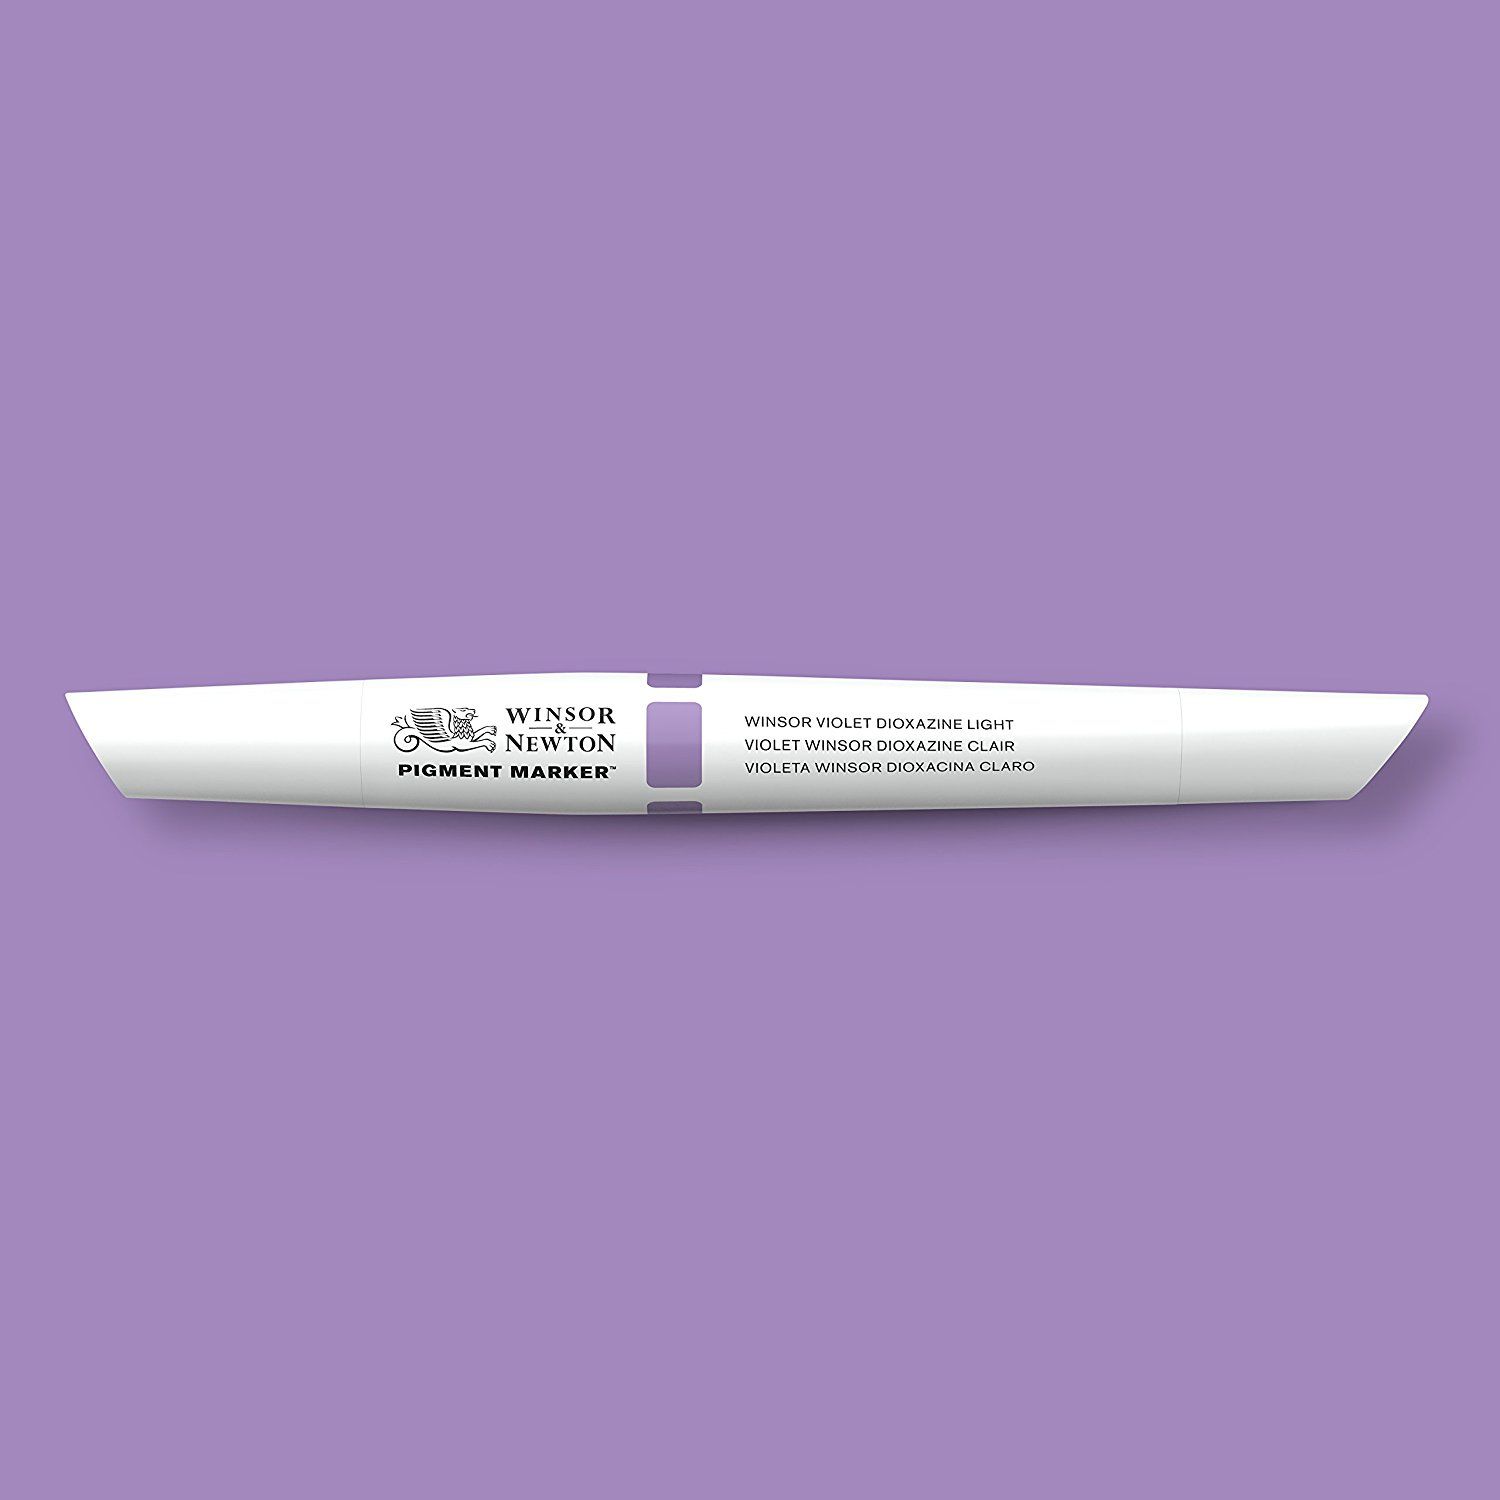 Winsor & Newton Pigment Marker - Winsor Violet Dioxine Light